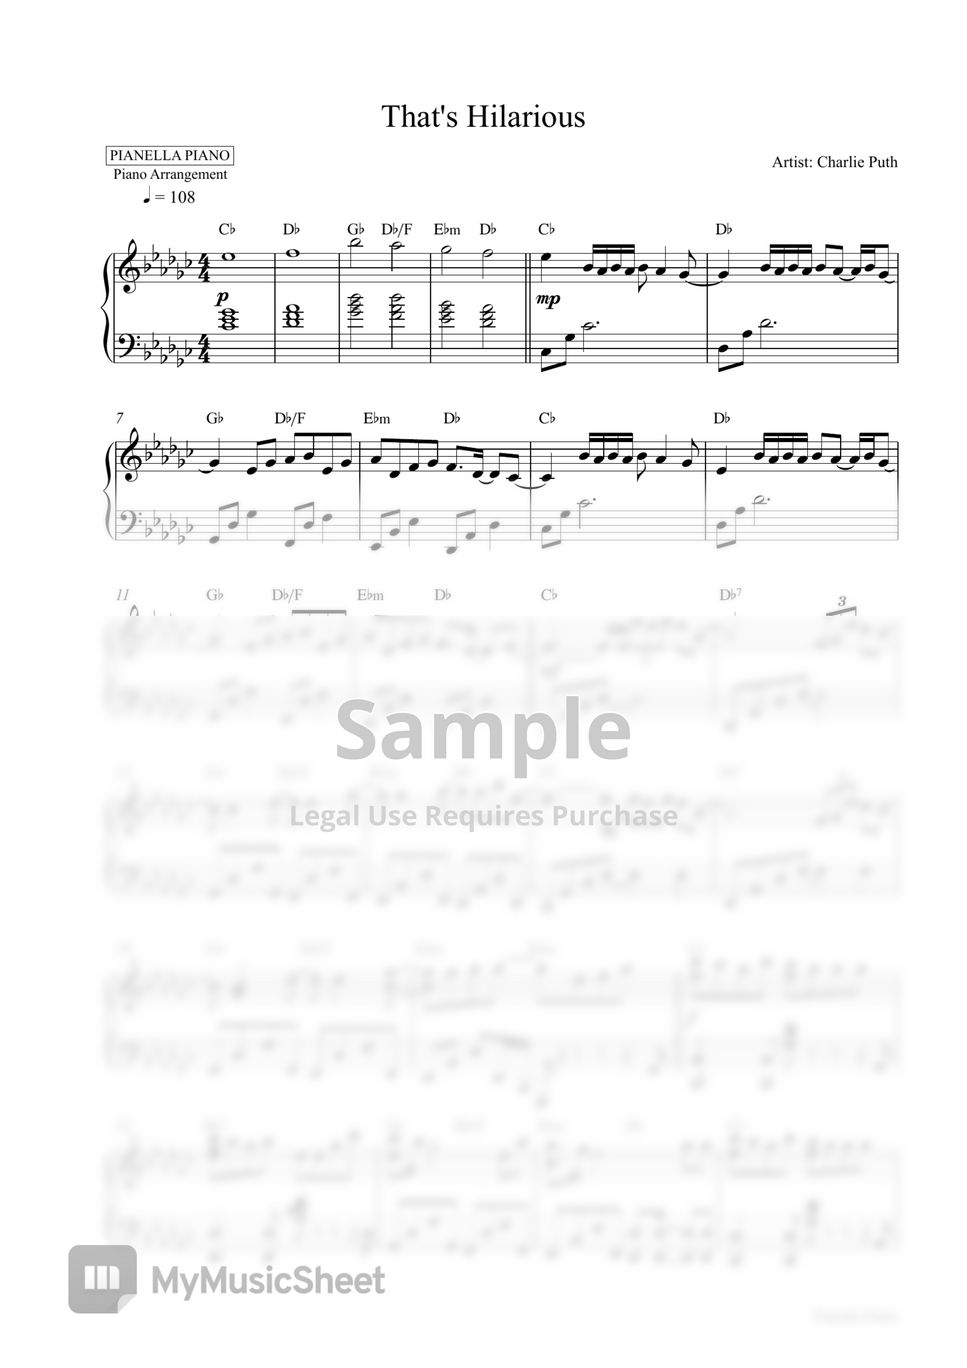 Charlie Puth - That's Hilarious (2 PDF: Original Key Gb Major & Easier Key G Major) by Pianella Piano